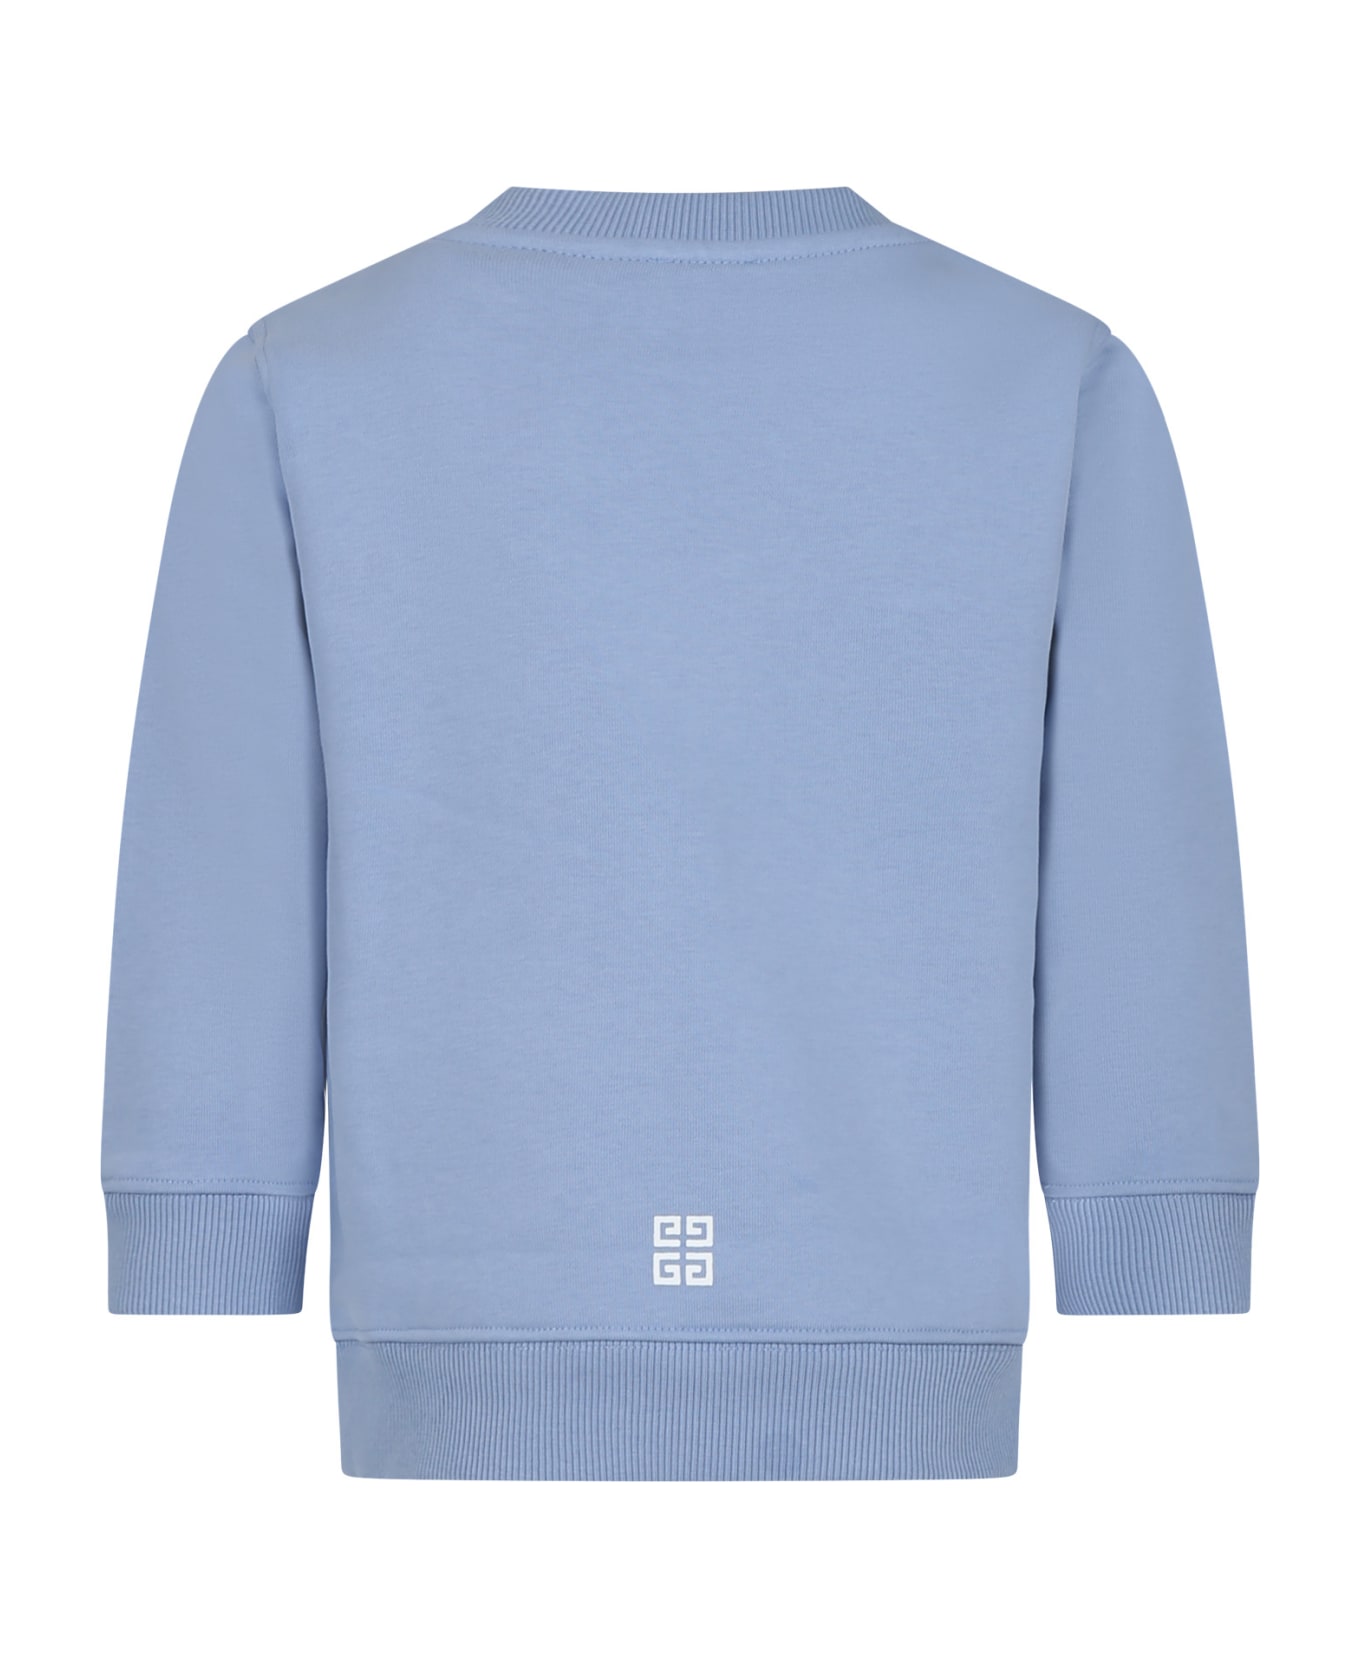 Givenchy Light Blue Sweatshirt For Boy With Logo - Light Blue